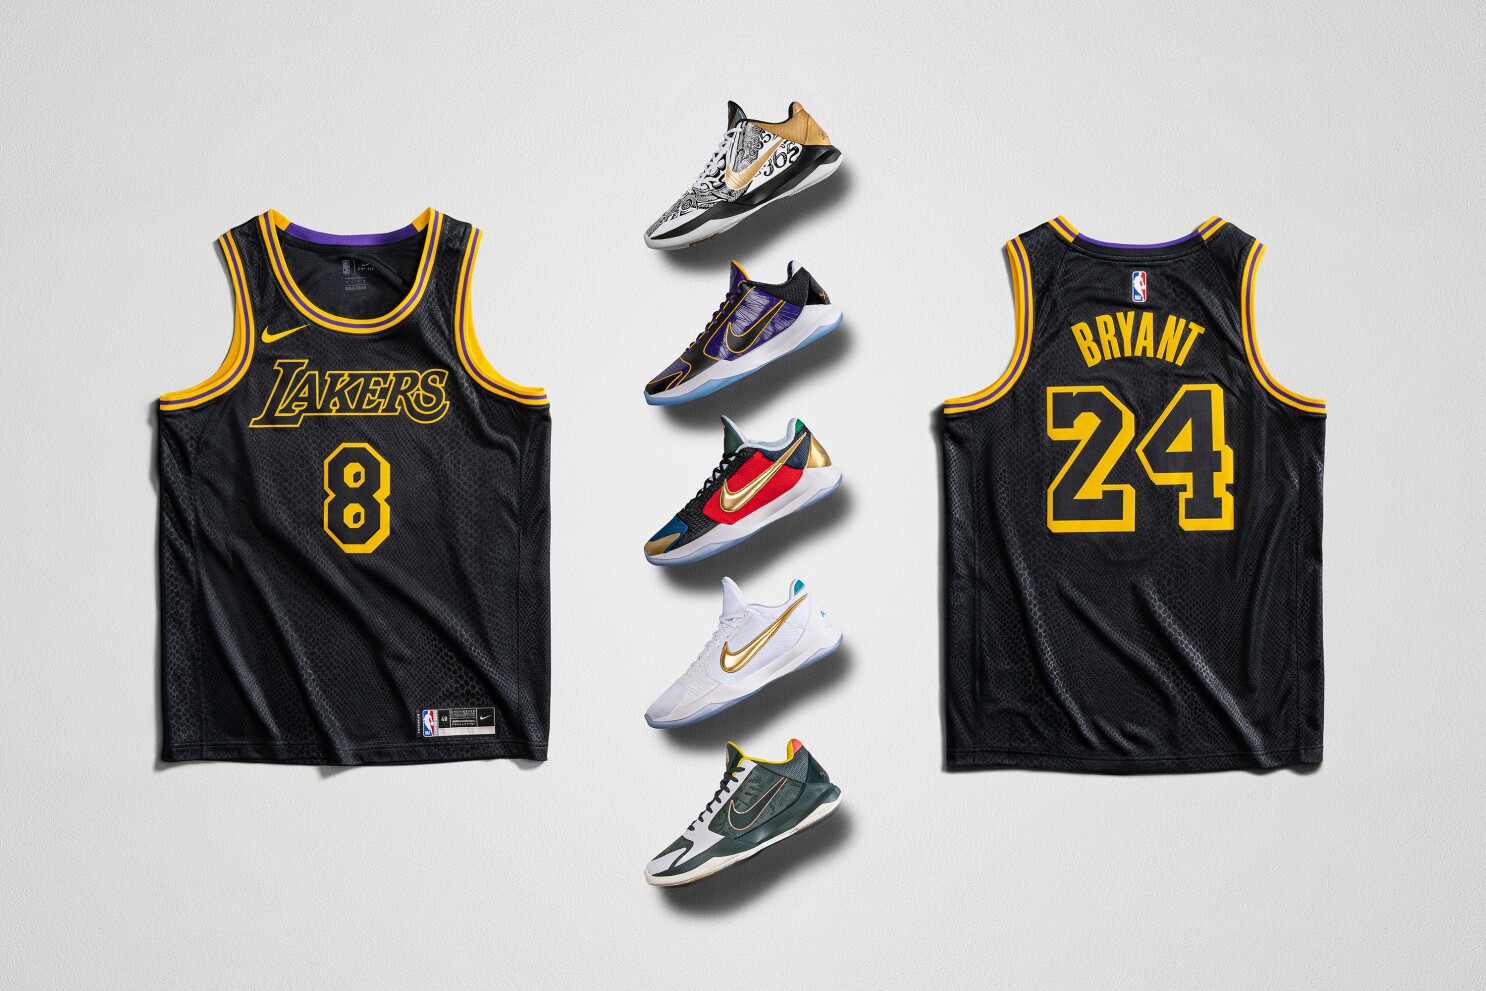 Nike Mamba Week to feature new Kobe Bryant sneakers, jersey - Los ...